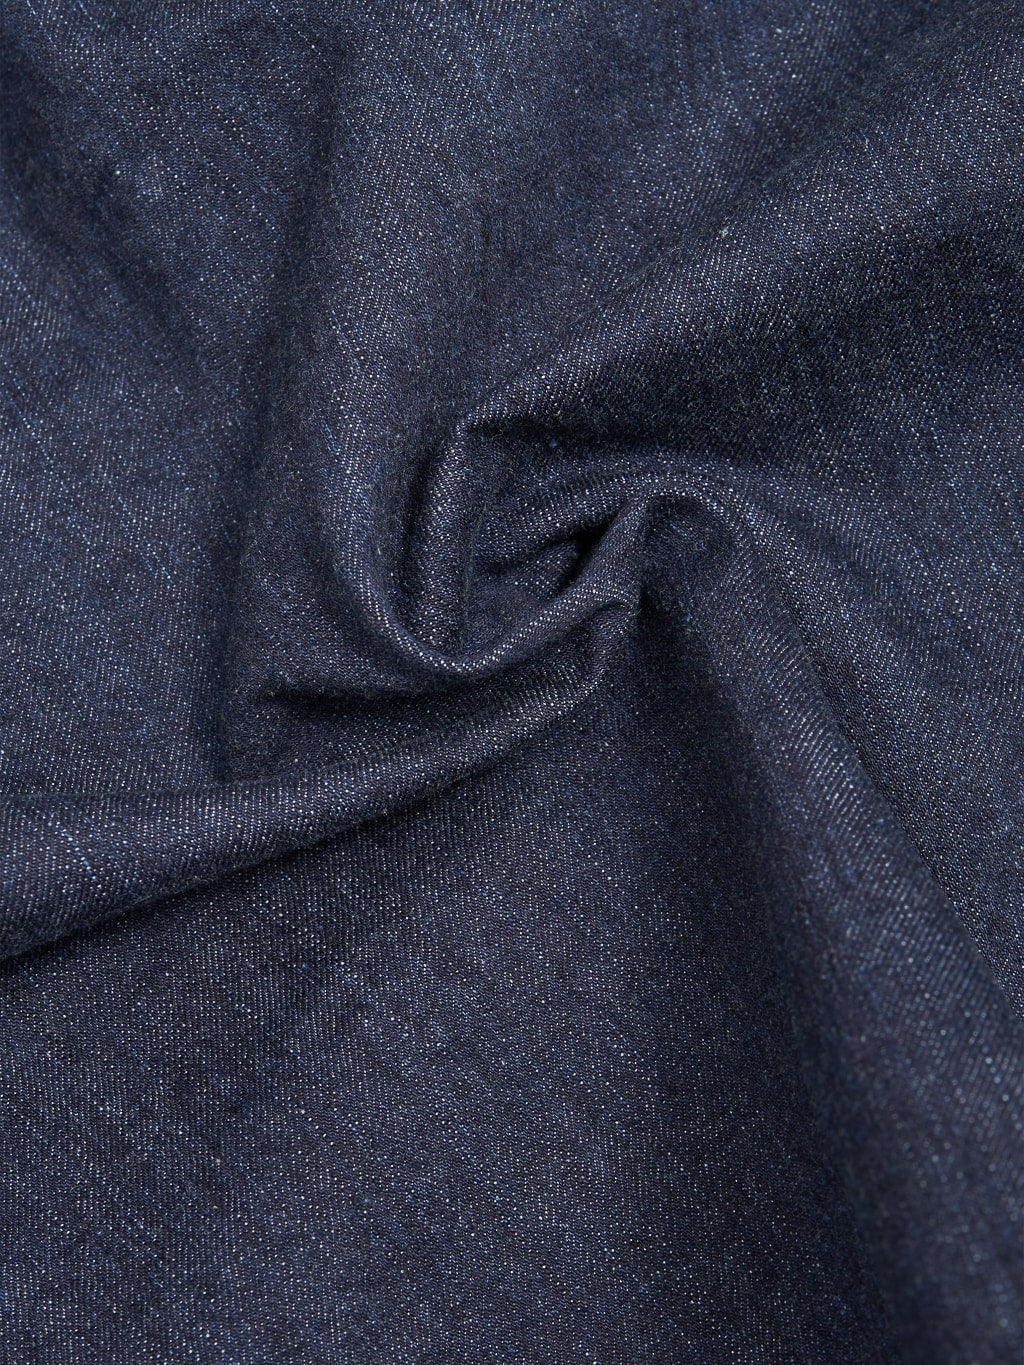 Ues Traveling Shirt Indigo selvedge denim cotton fabric texture